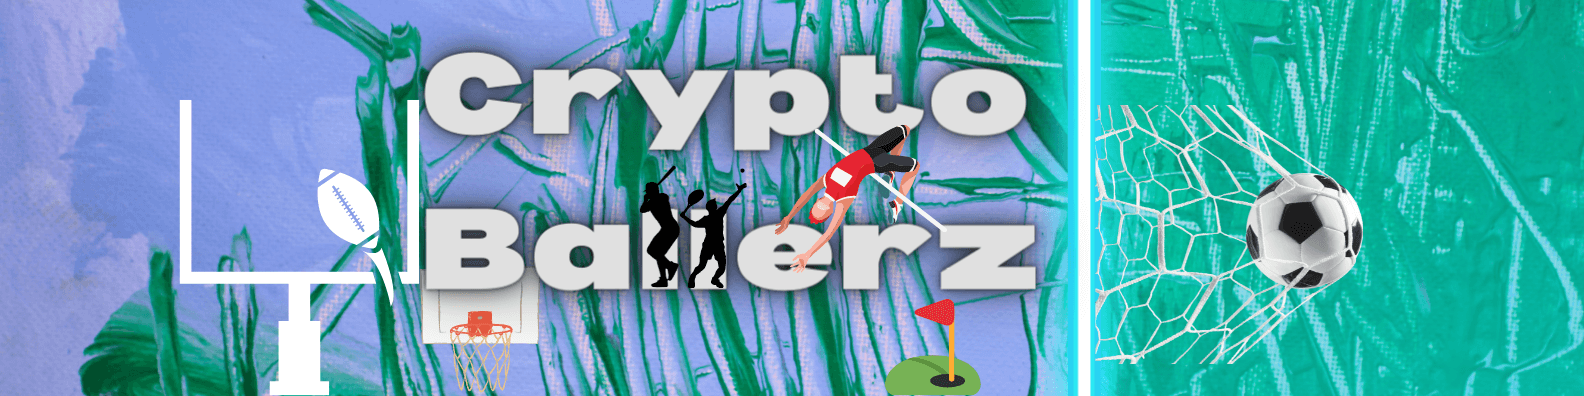 CryptoBall3rz banner